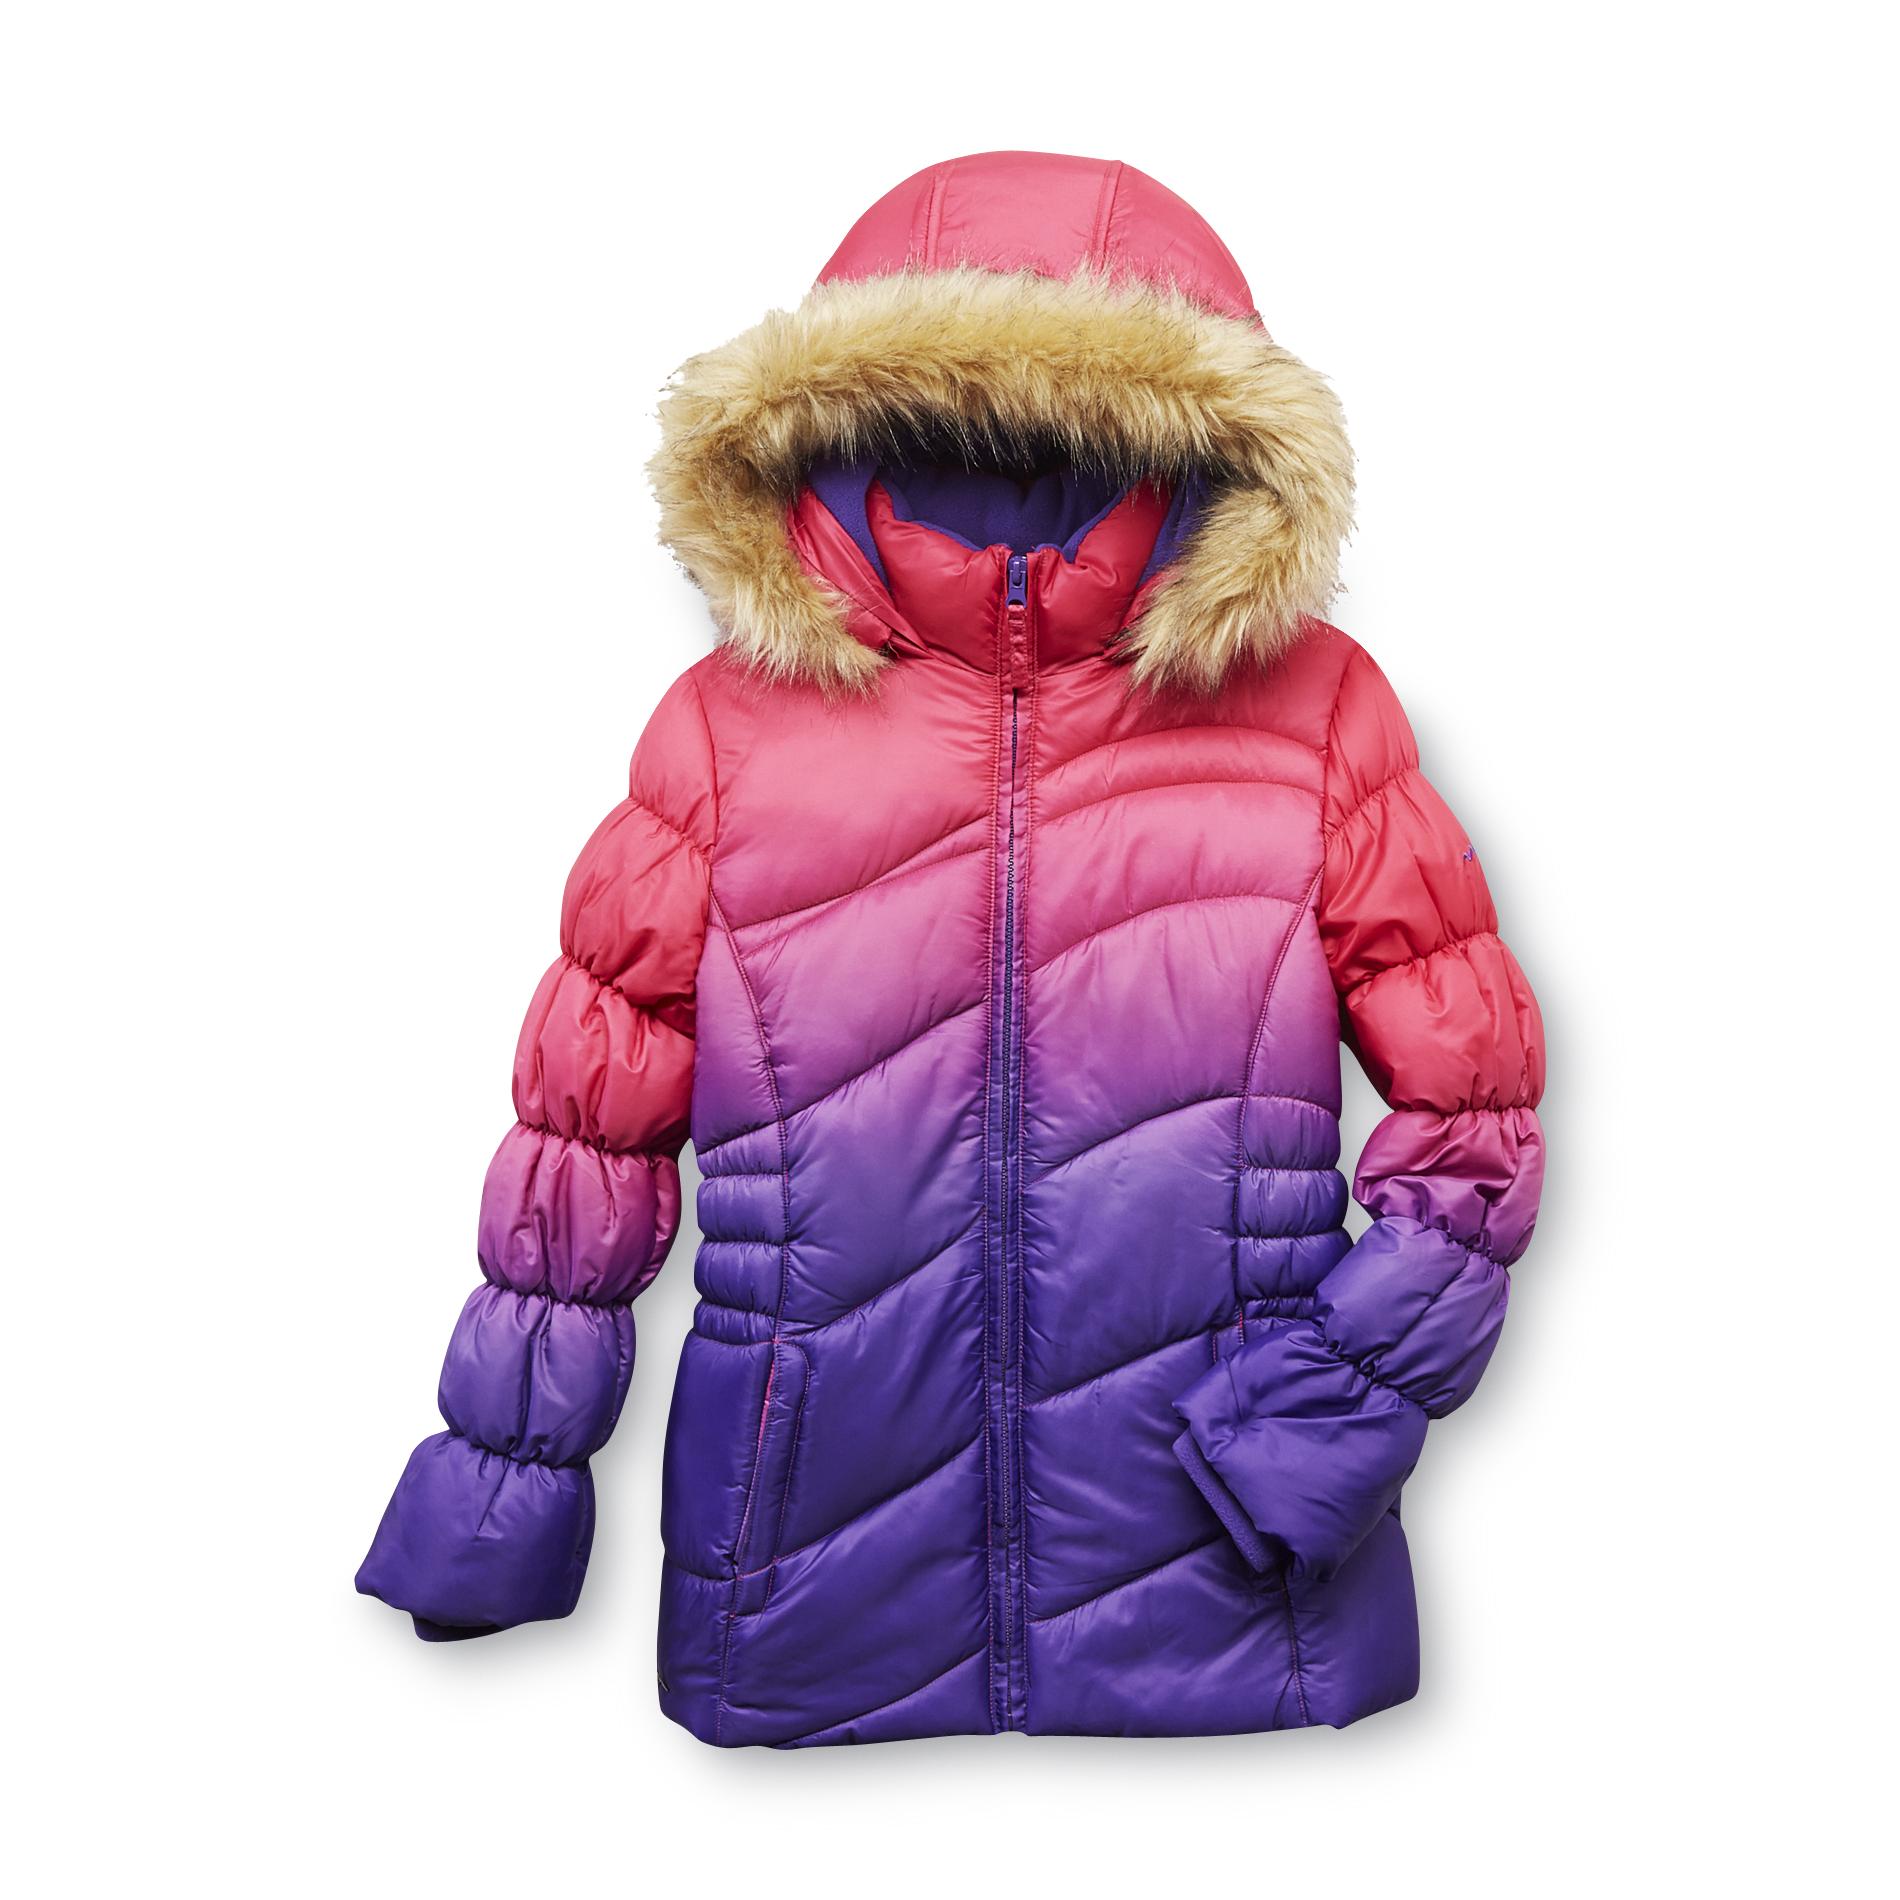 Minus Zero Girl's Winter Jacket